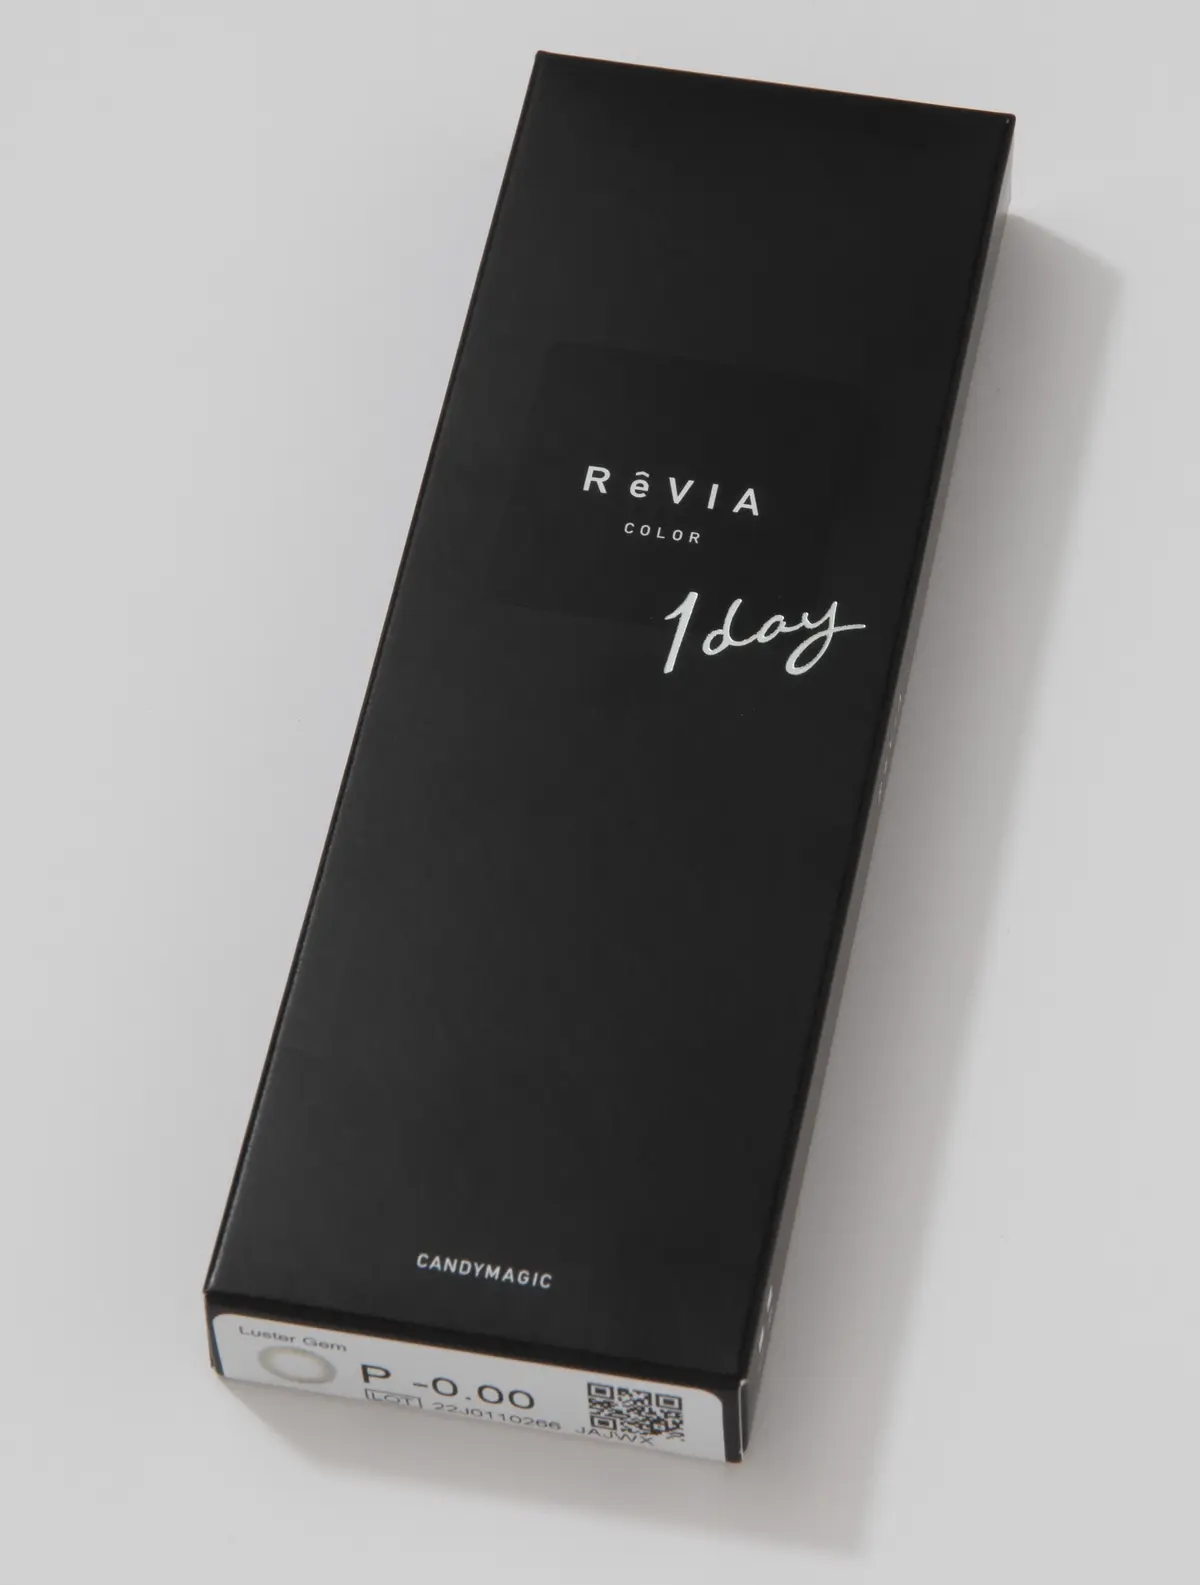 Reviaのパッケージ画像